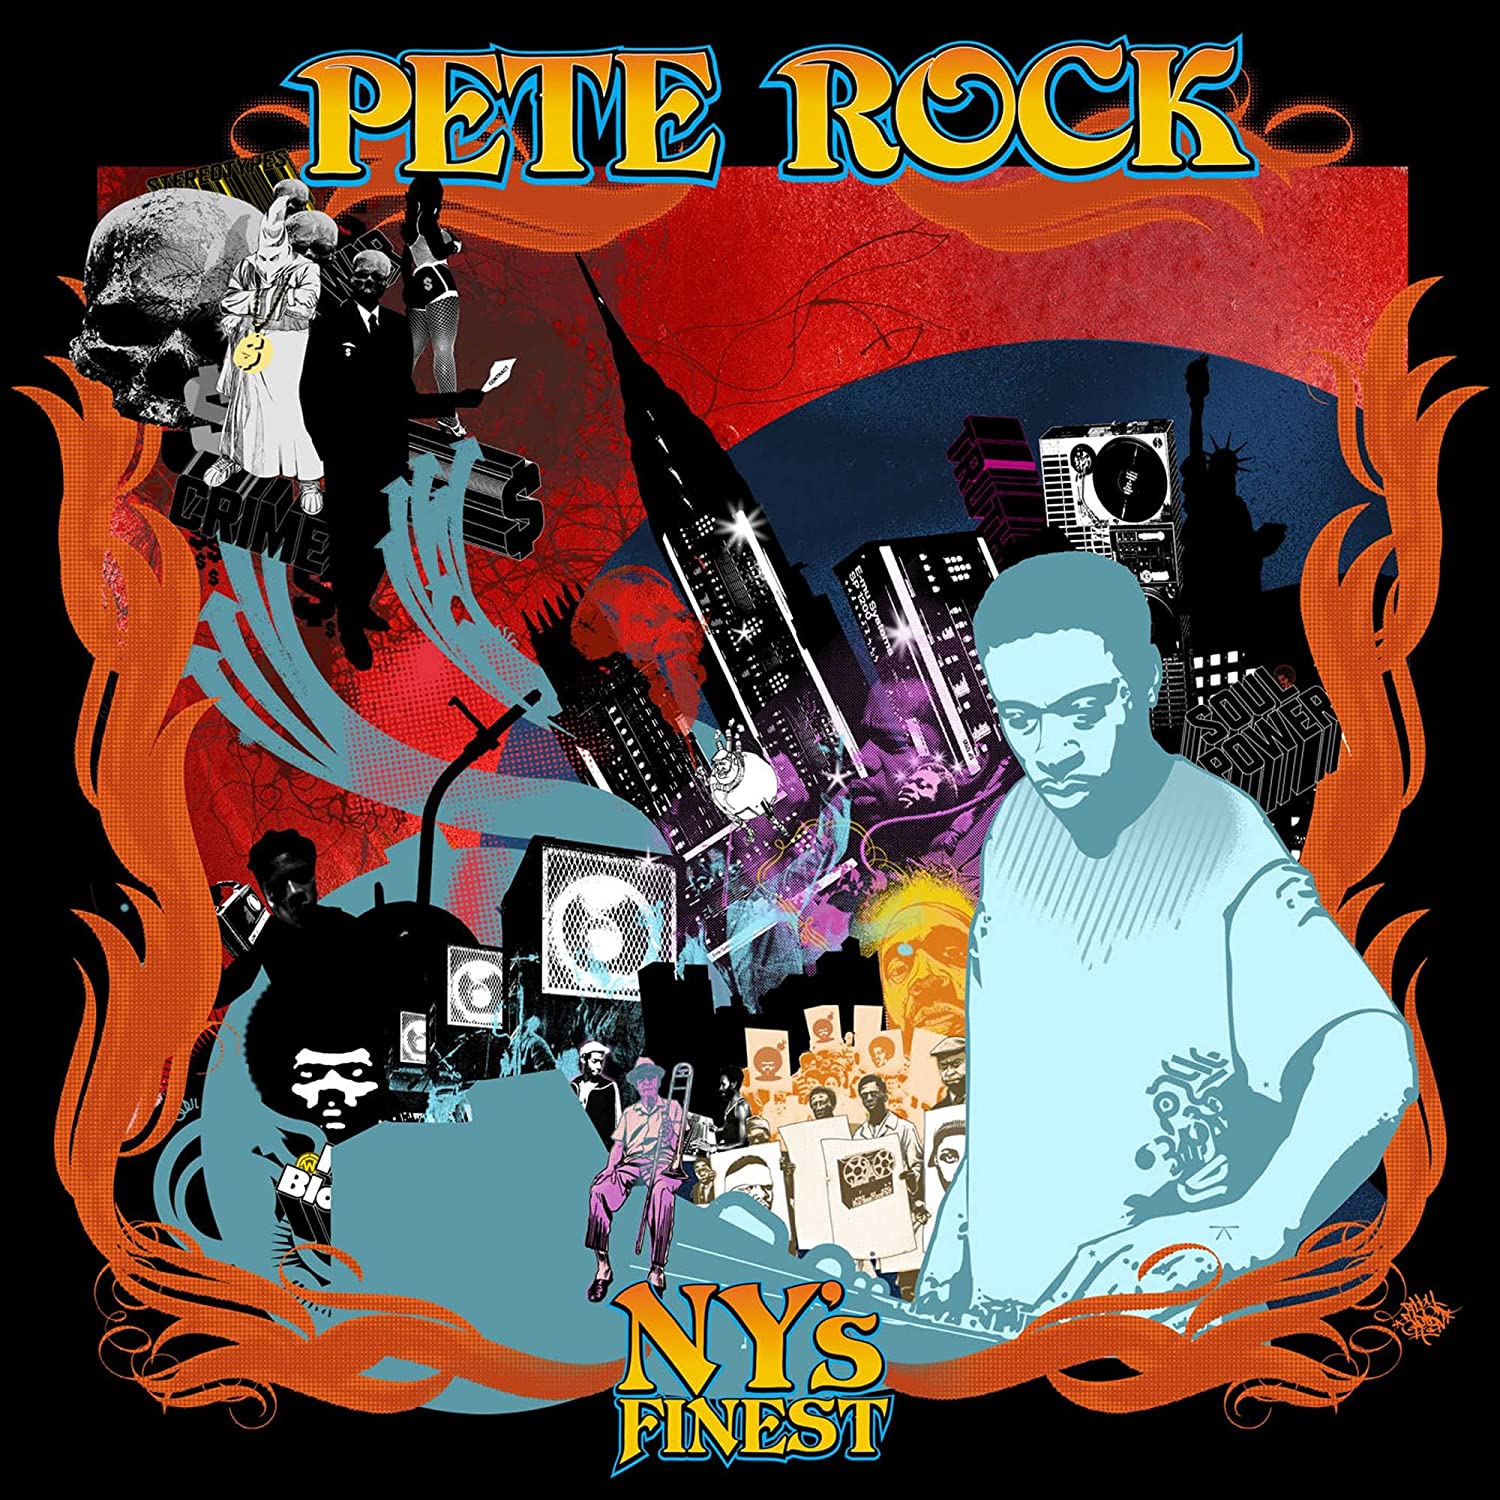 NY’s Finest by Pete Rock